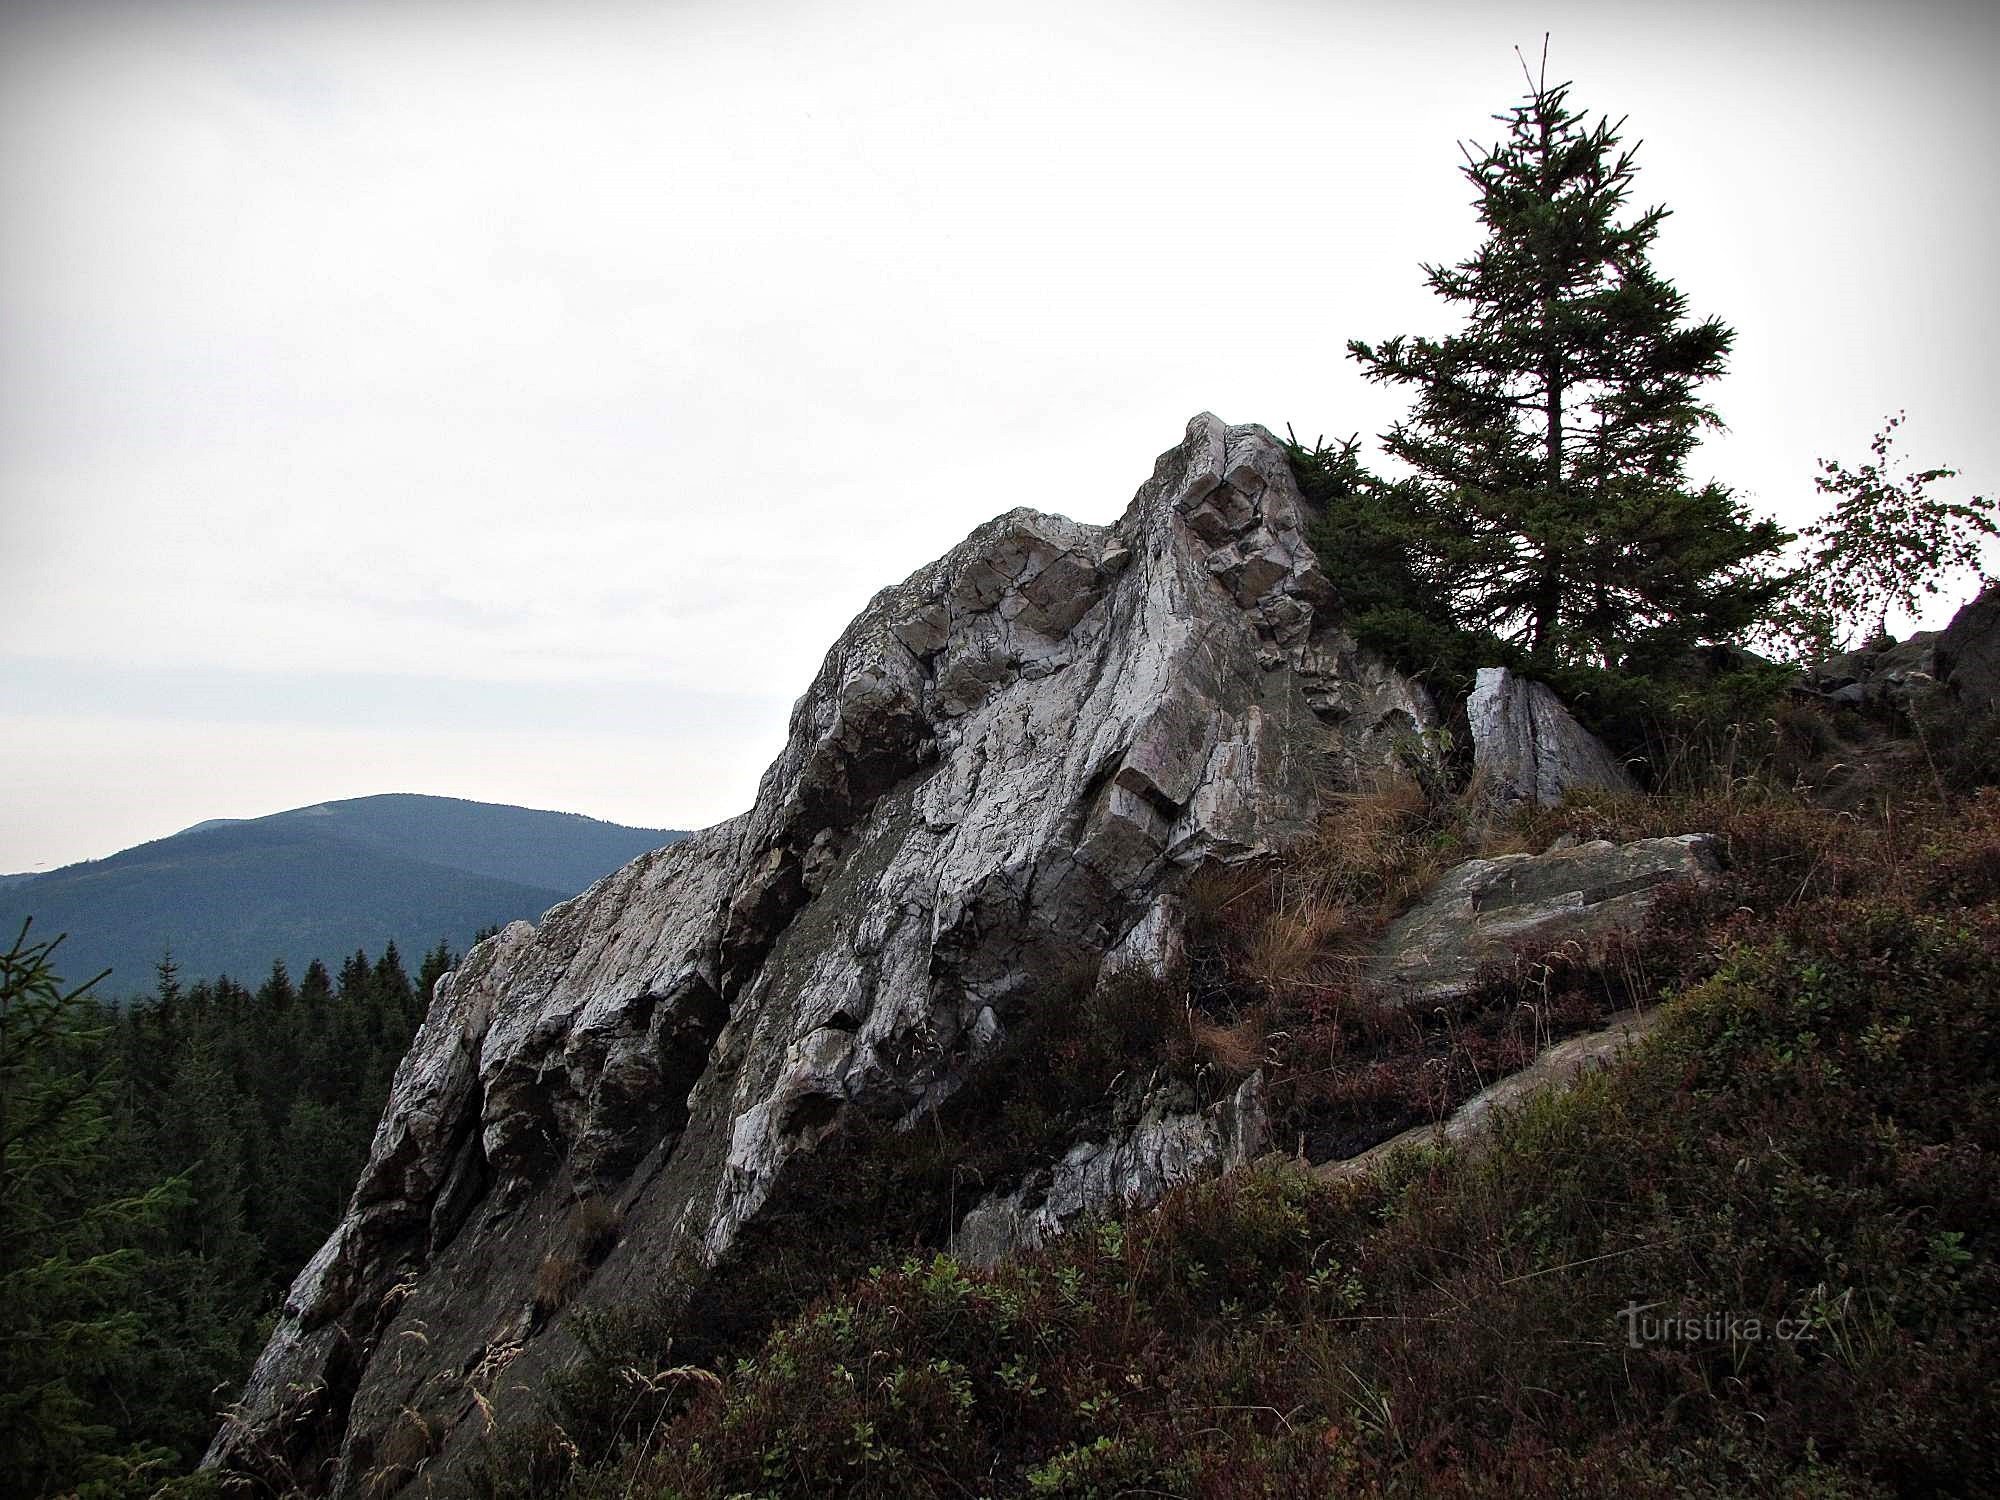 Jesenice rock viewpoints - 1. White stone